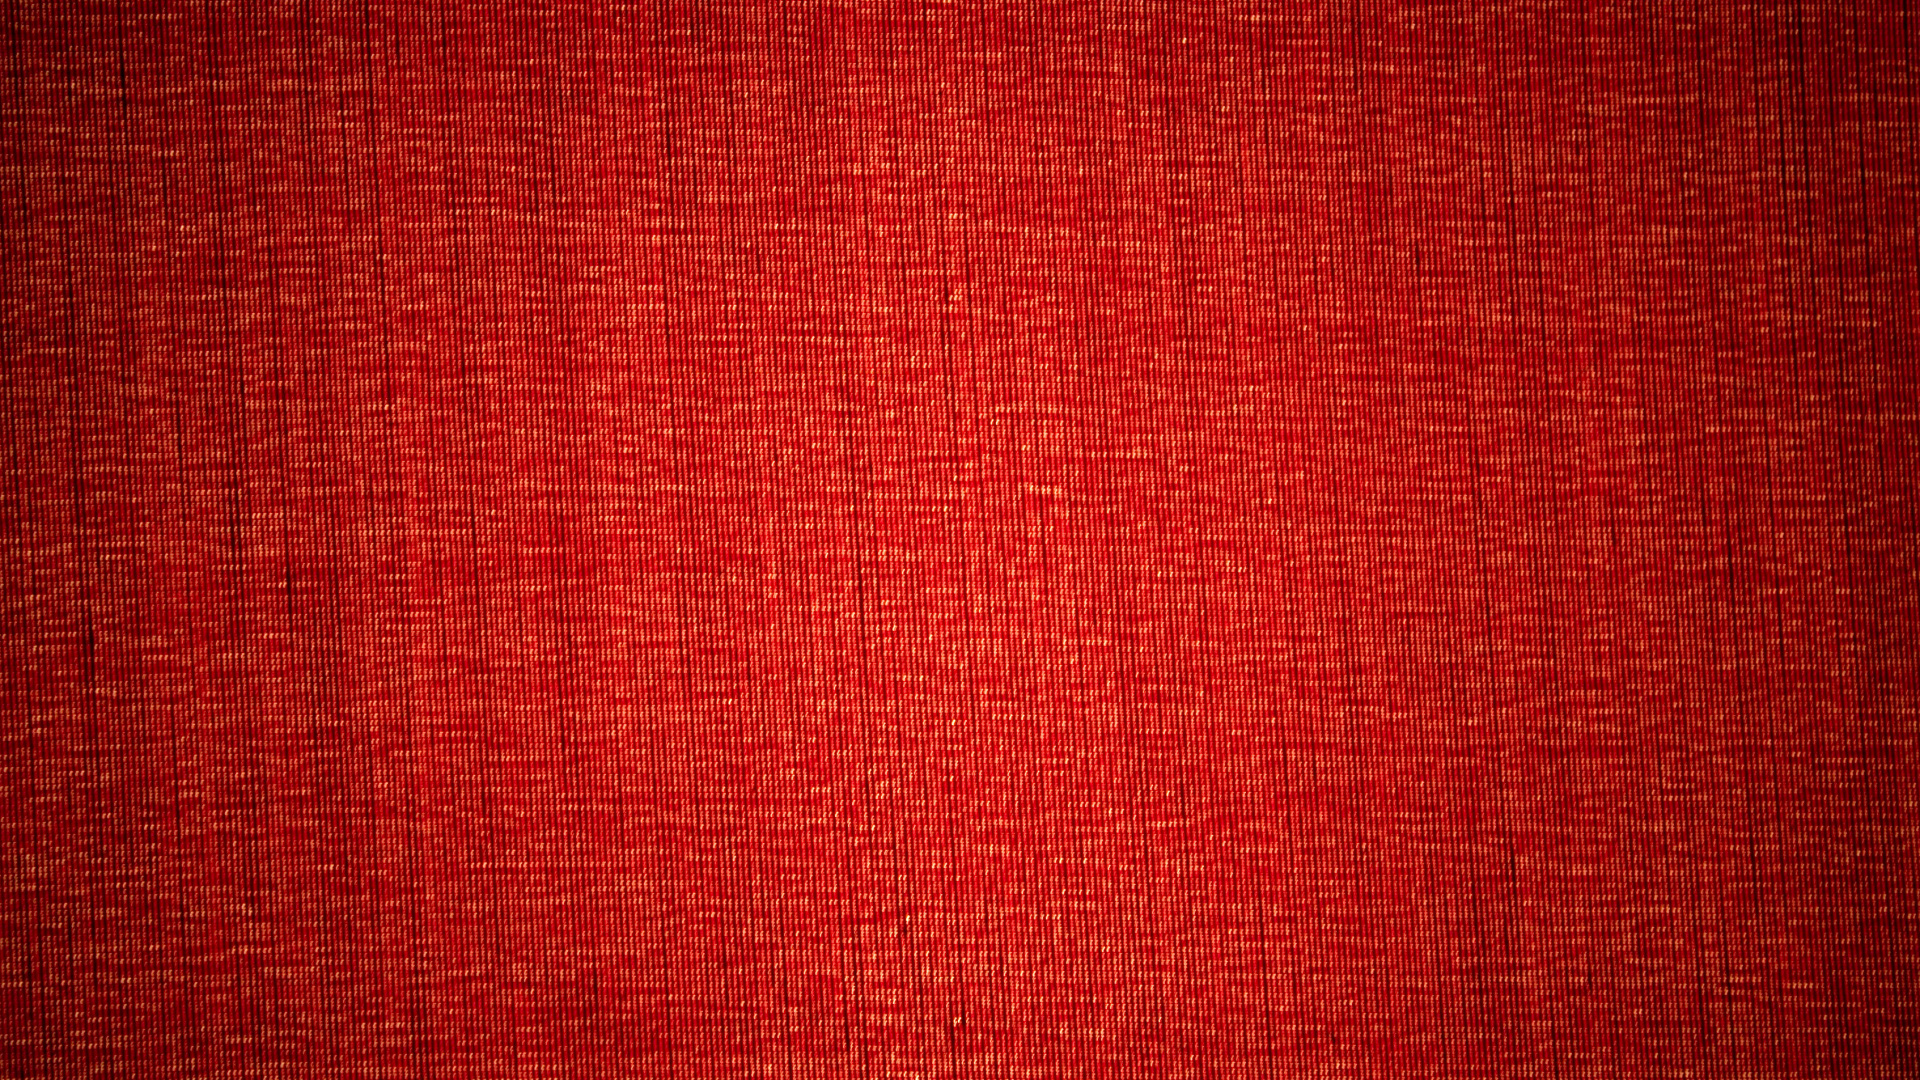 Textil Rojo en la Imagen de Cerca. Wallpaper in 1920x1080 Resolution